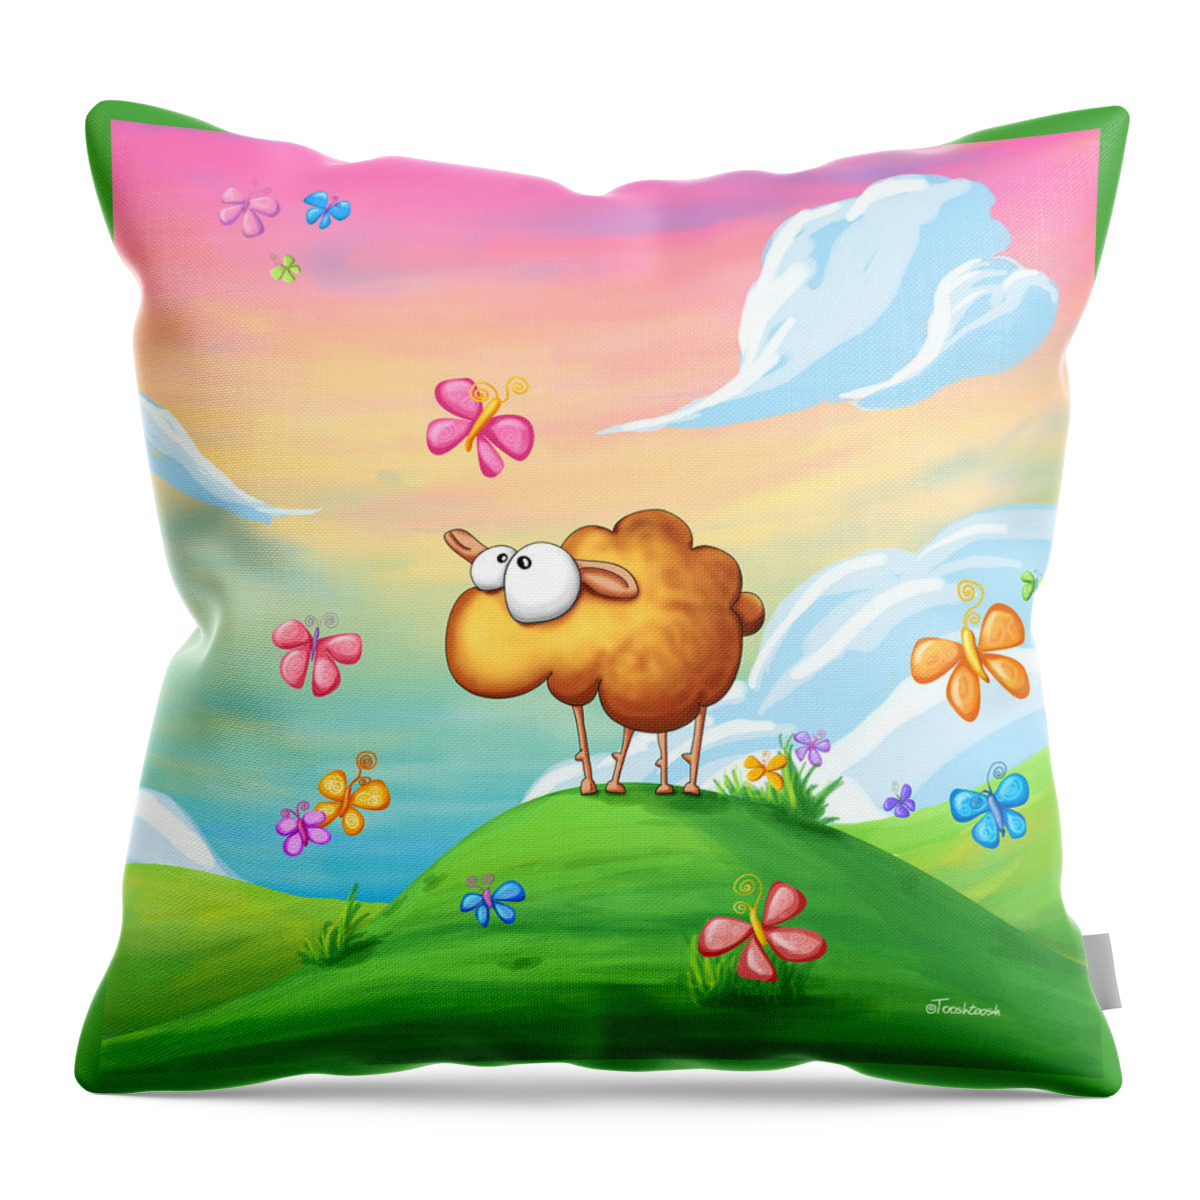 Sheep Throw Pillow featuring the digital art Wallo the sheep - pink by Tooshtoosh